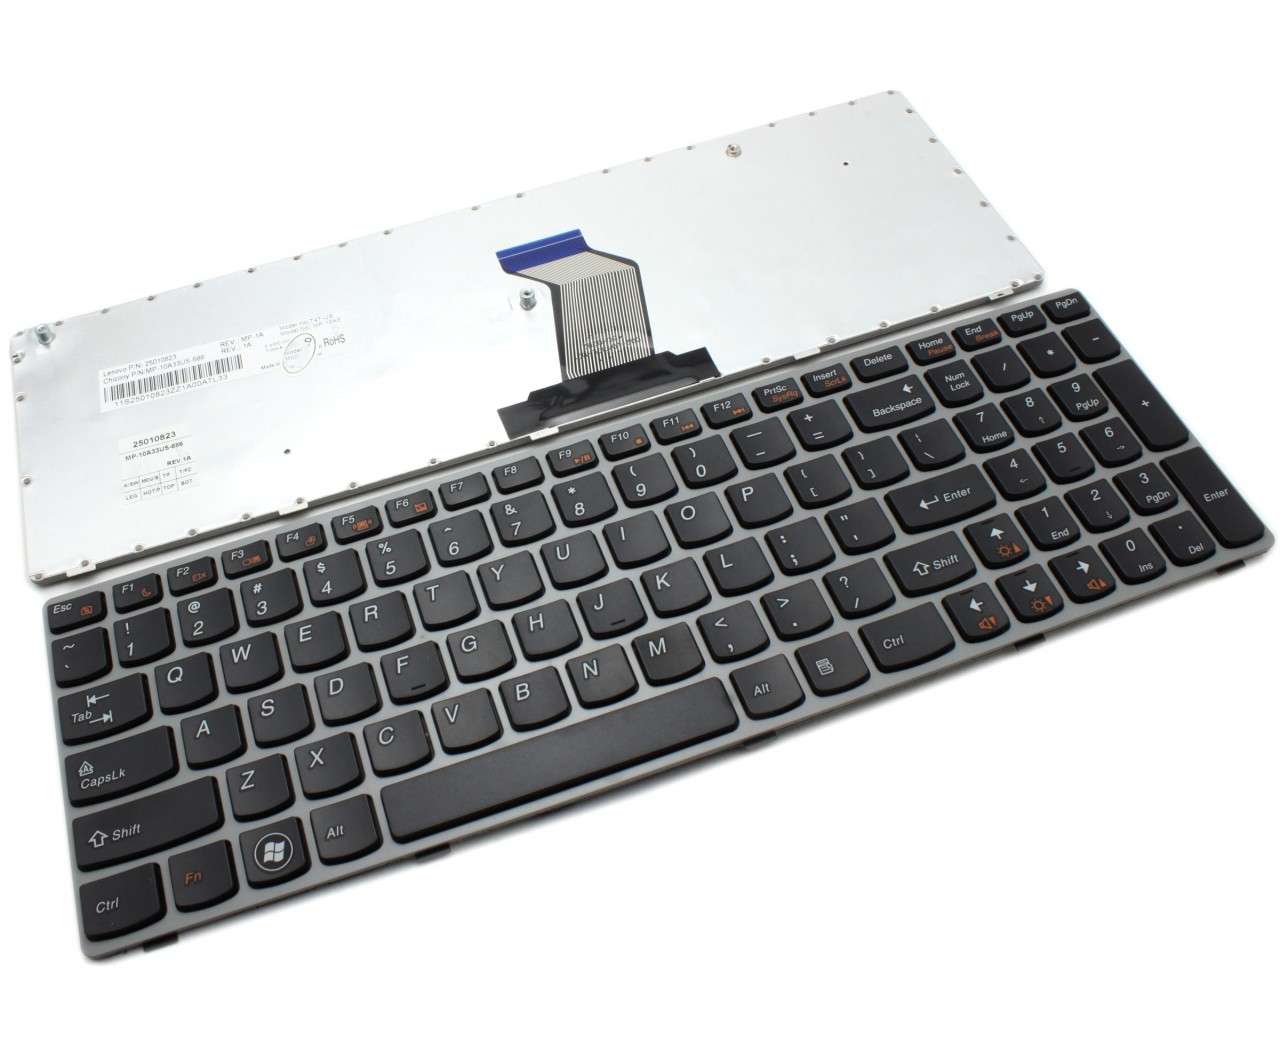 Tastatura Lenovo IdeaPad G770AH Neagra cu Rama Gri Originala